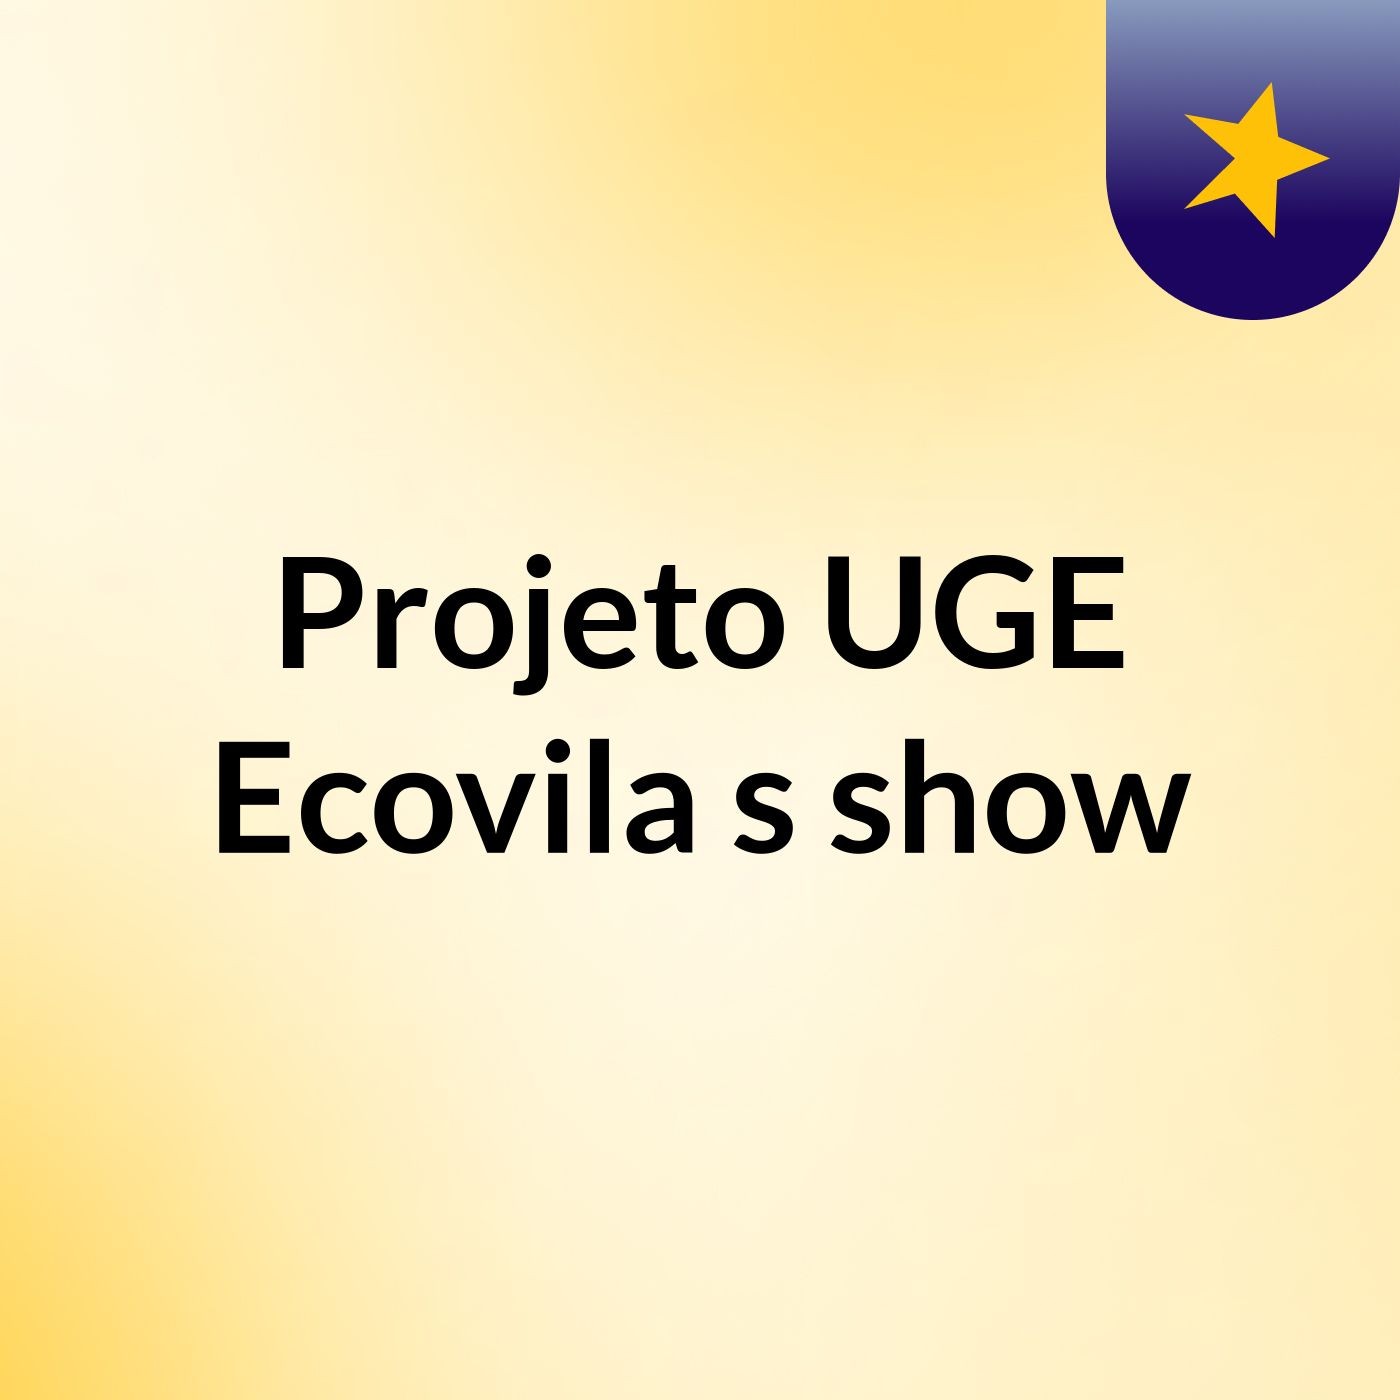 Projeto UGE Ecovila's show